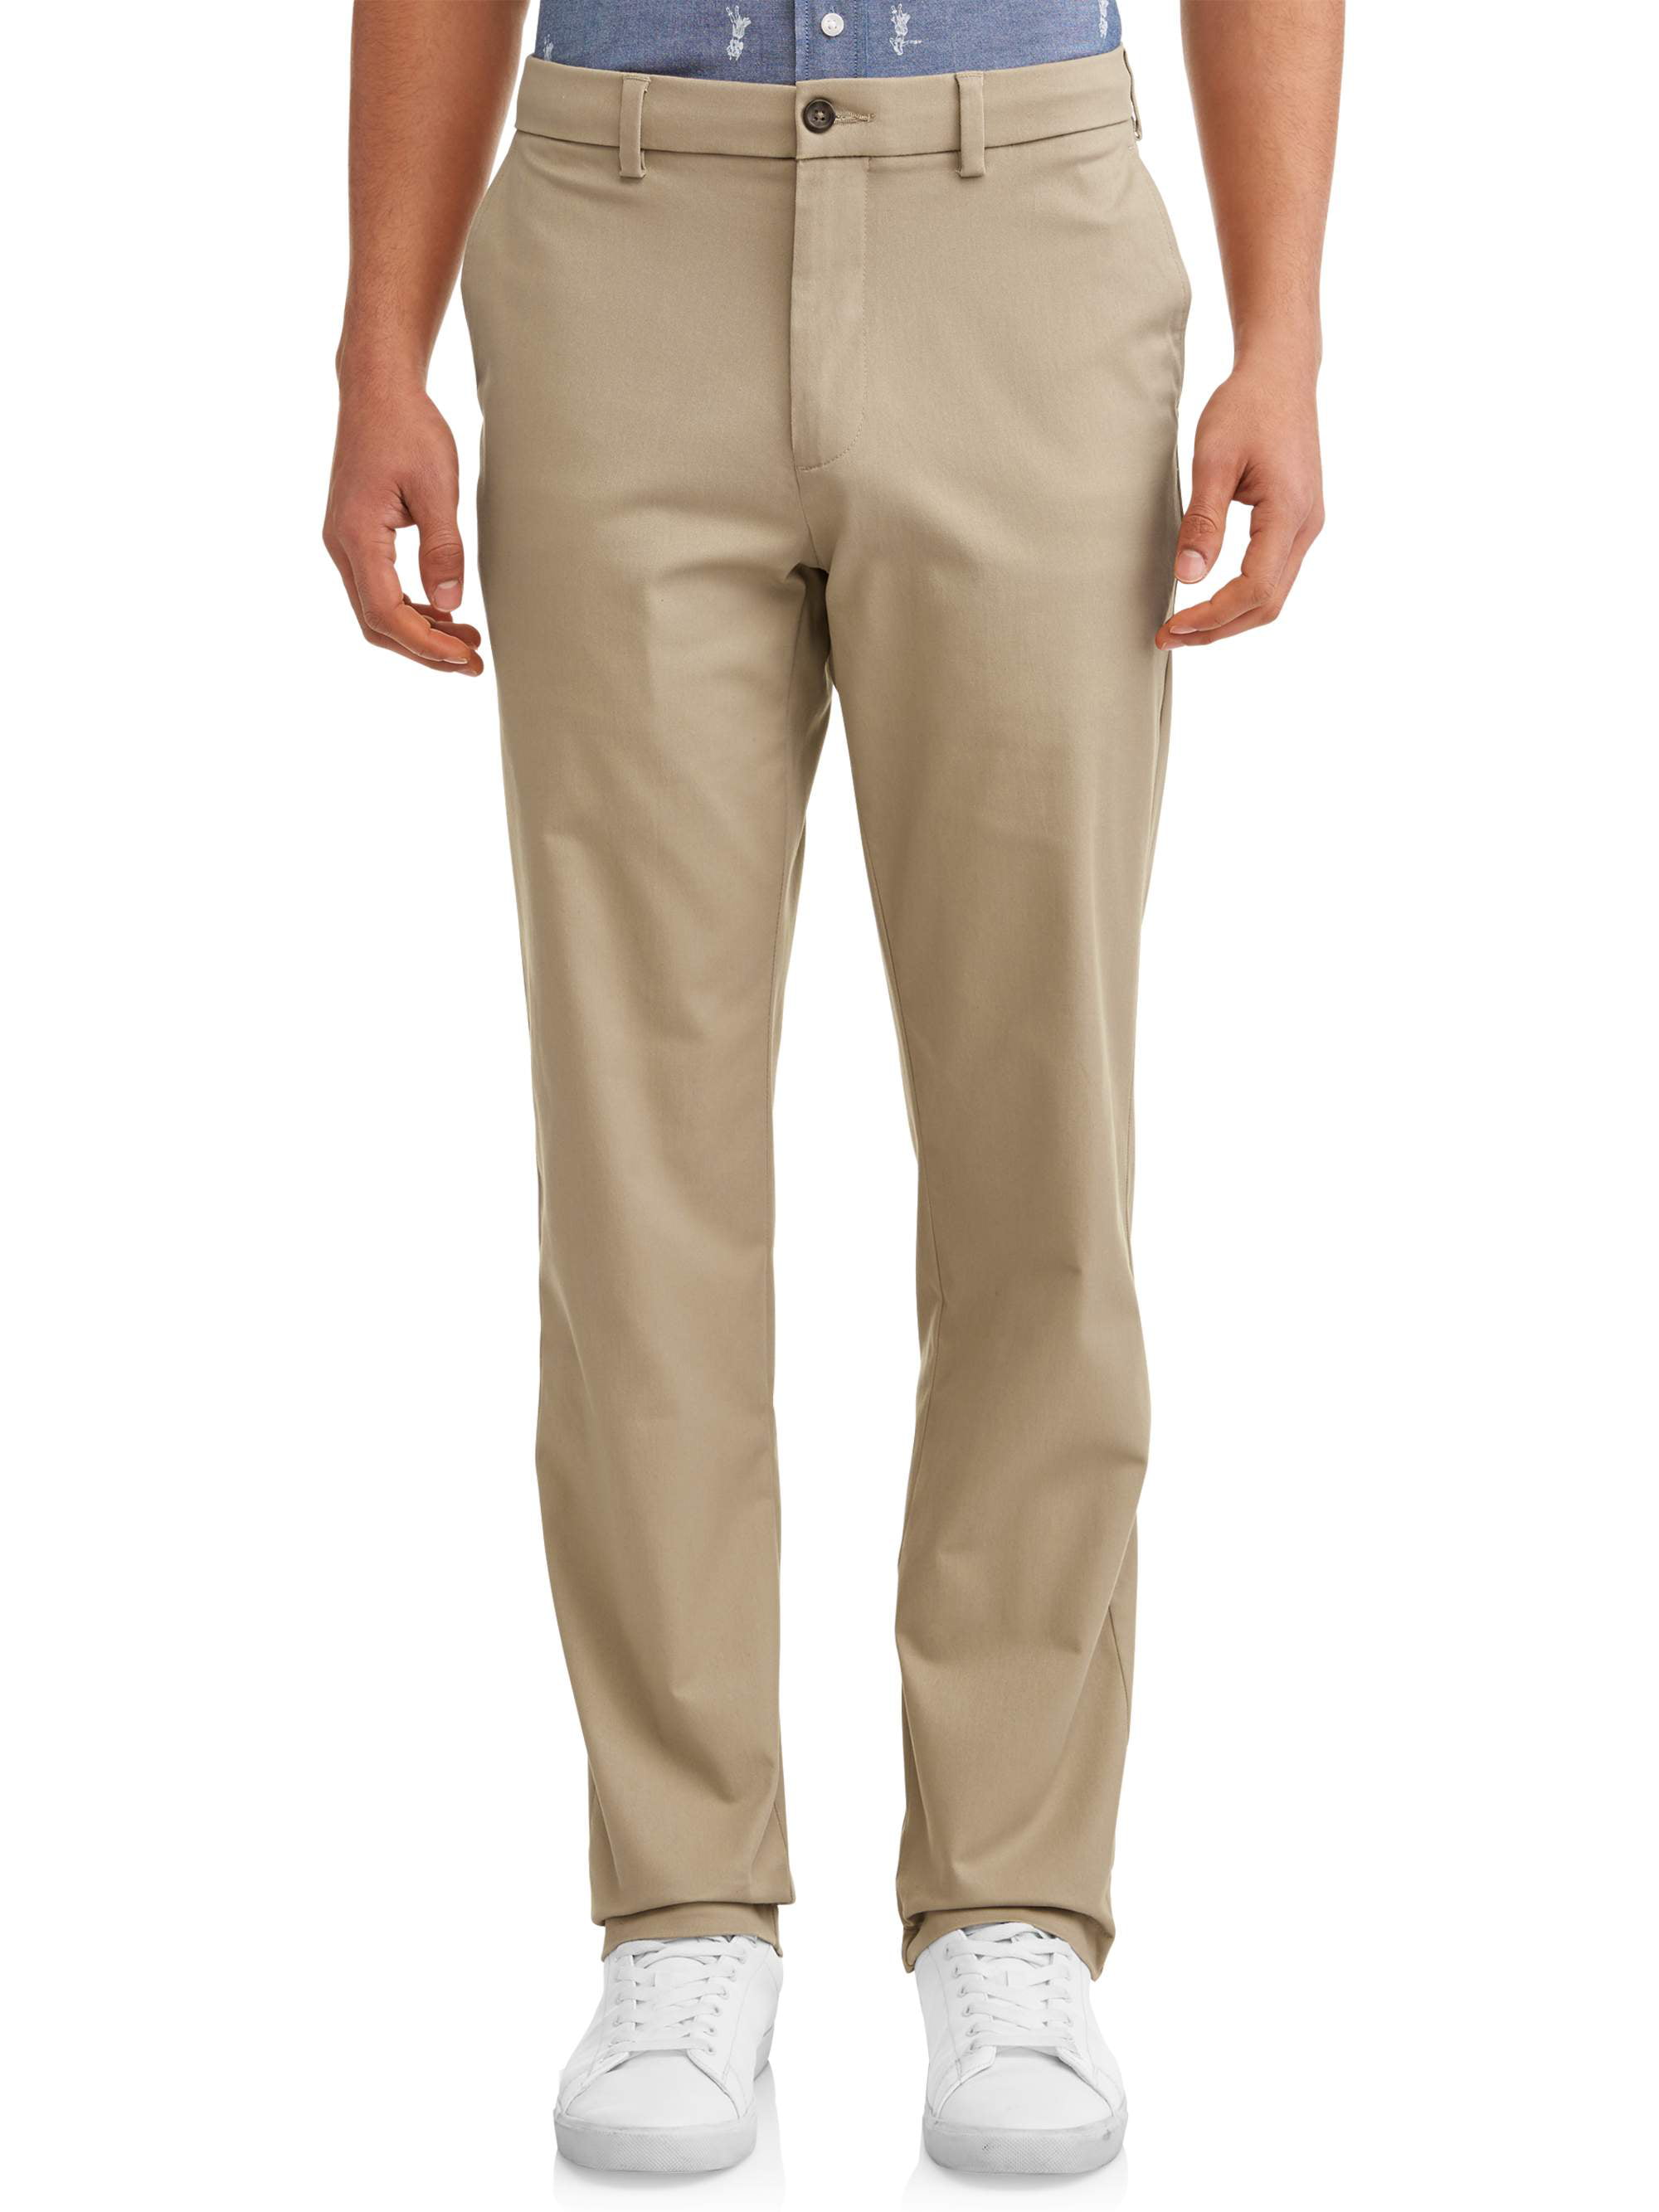 George Men's Premium Straight Fit Khaki Pant - Walmart.com